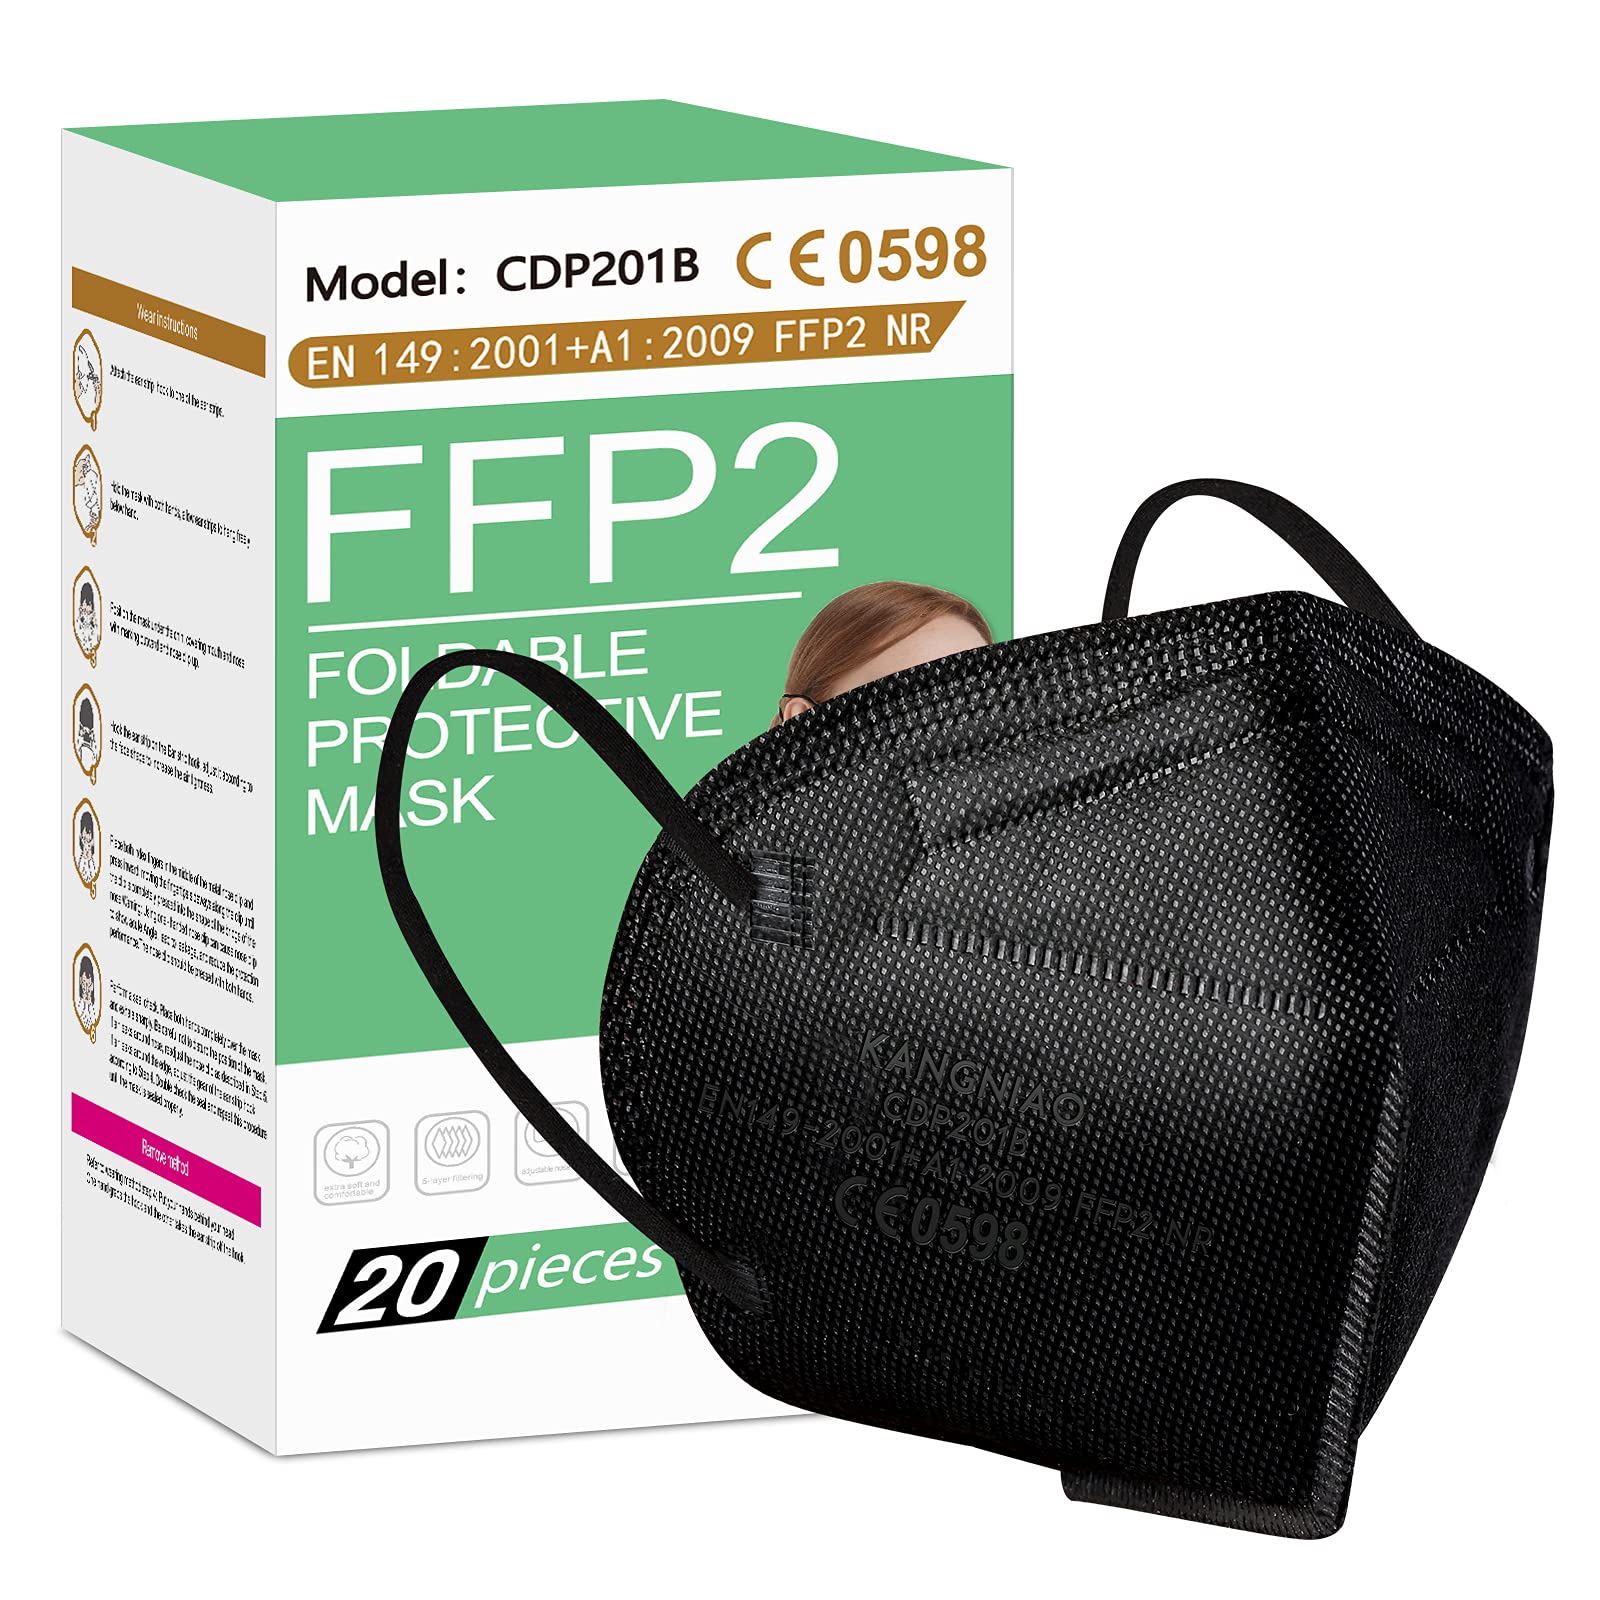 a box of ffp2 masks